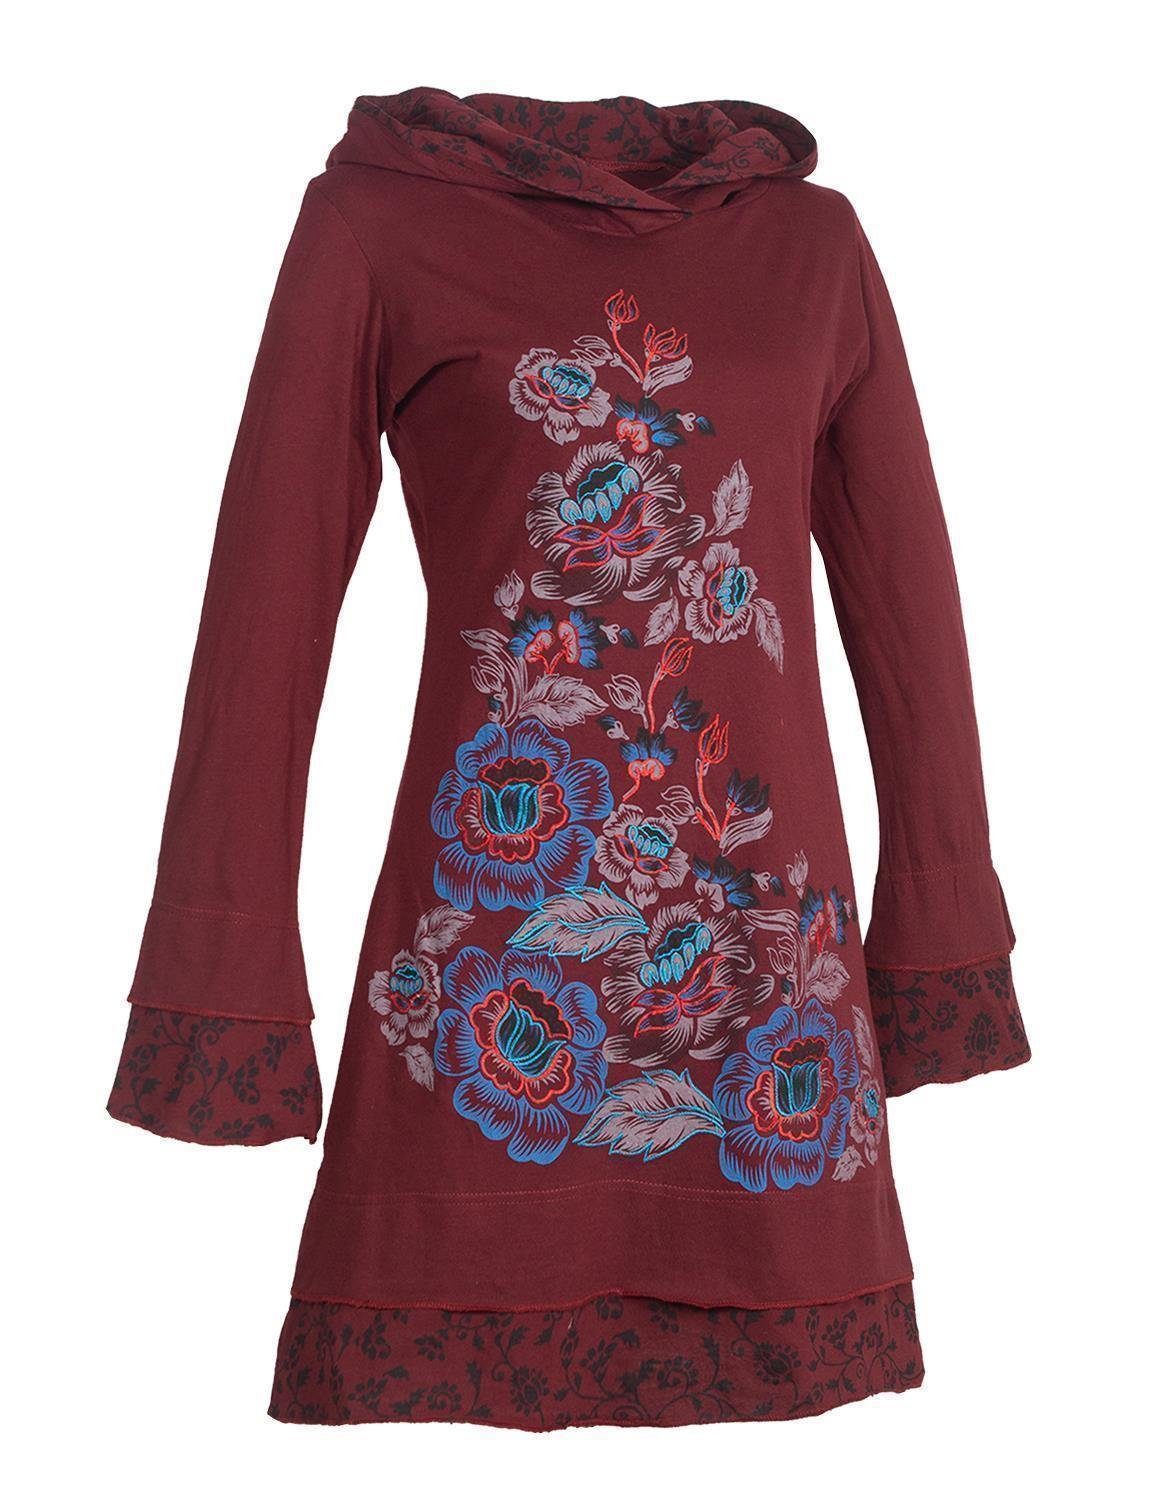 Blumen-Kleid Jerseykleid Lagenlook Goa Hoodie Hippie, Style Vishes Elfen, Boho, Damen Midikleid Kapuzen-Kleid Langarm dunkelrot